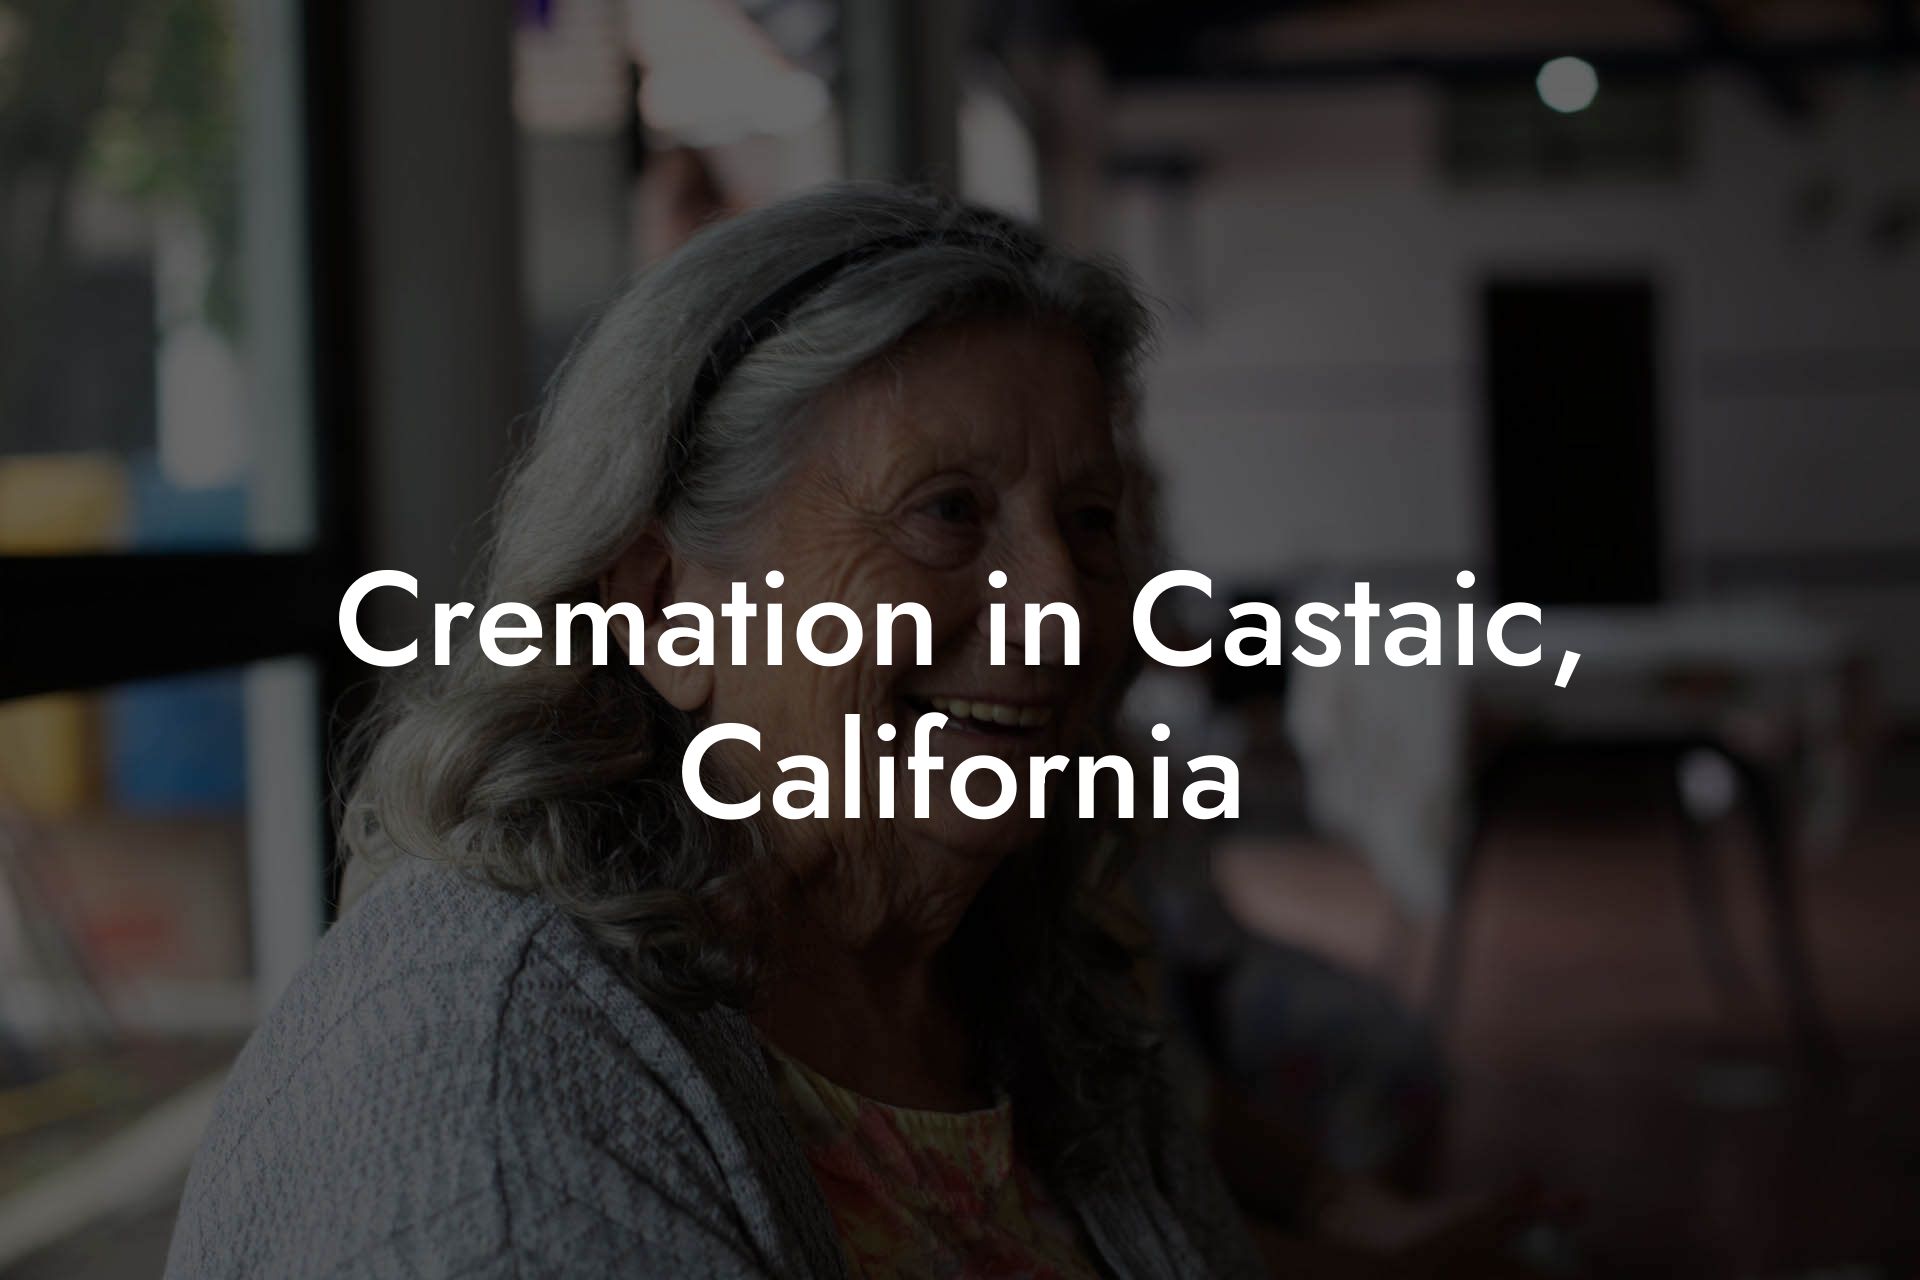 Cremation in Castaic, California